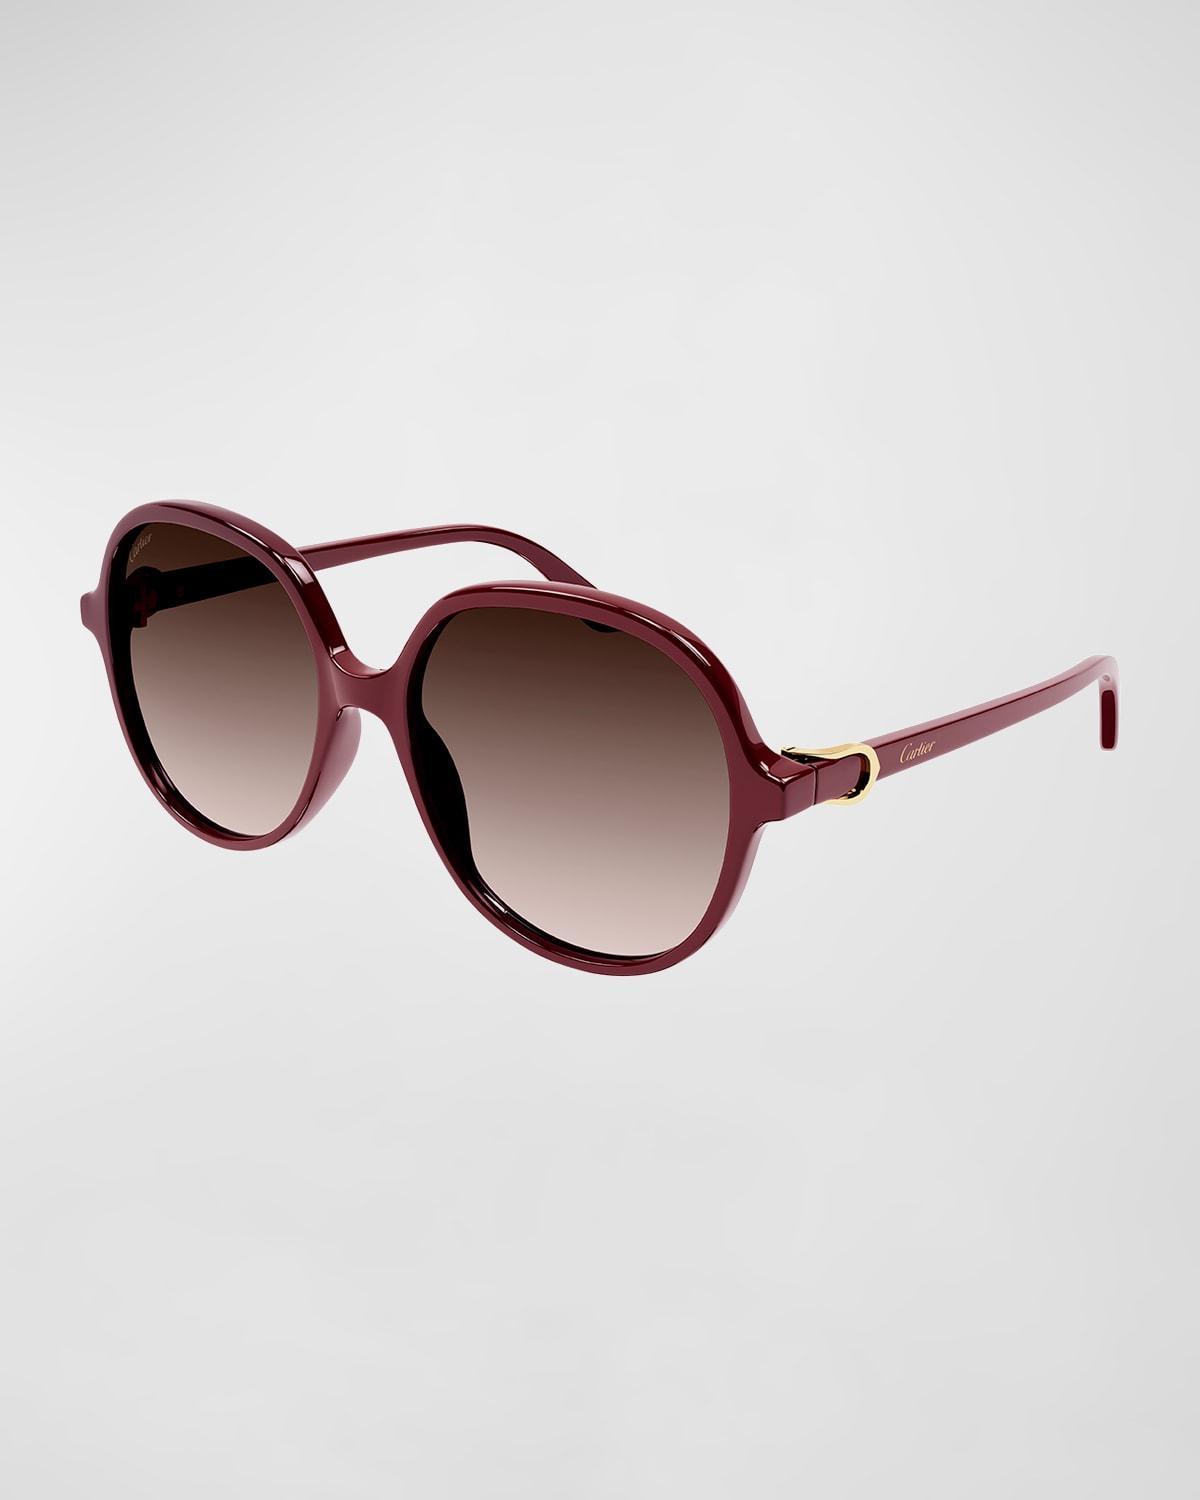 Chlo 57mm Rectangular Sunglasses Product Image